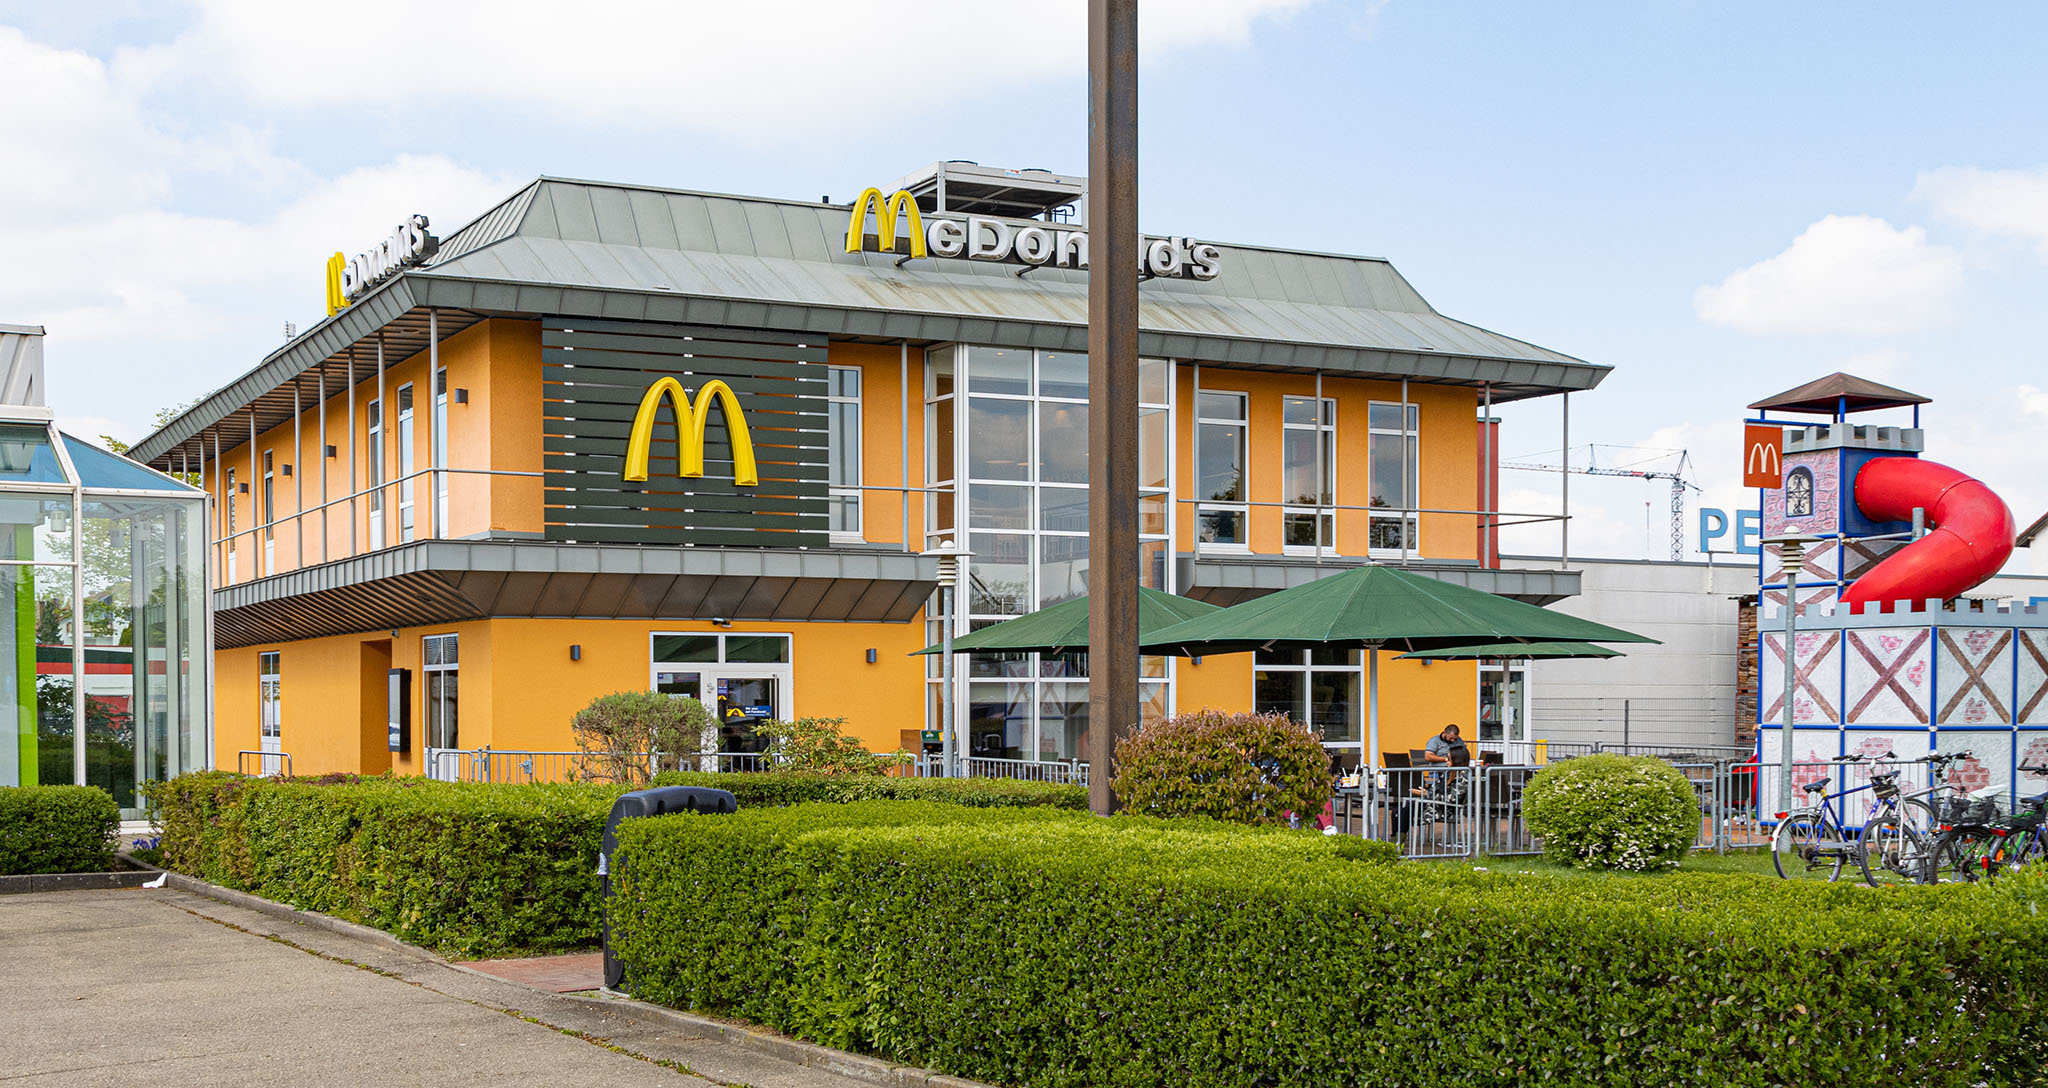 Das McDonald’s-Restaurant in Senden